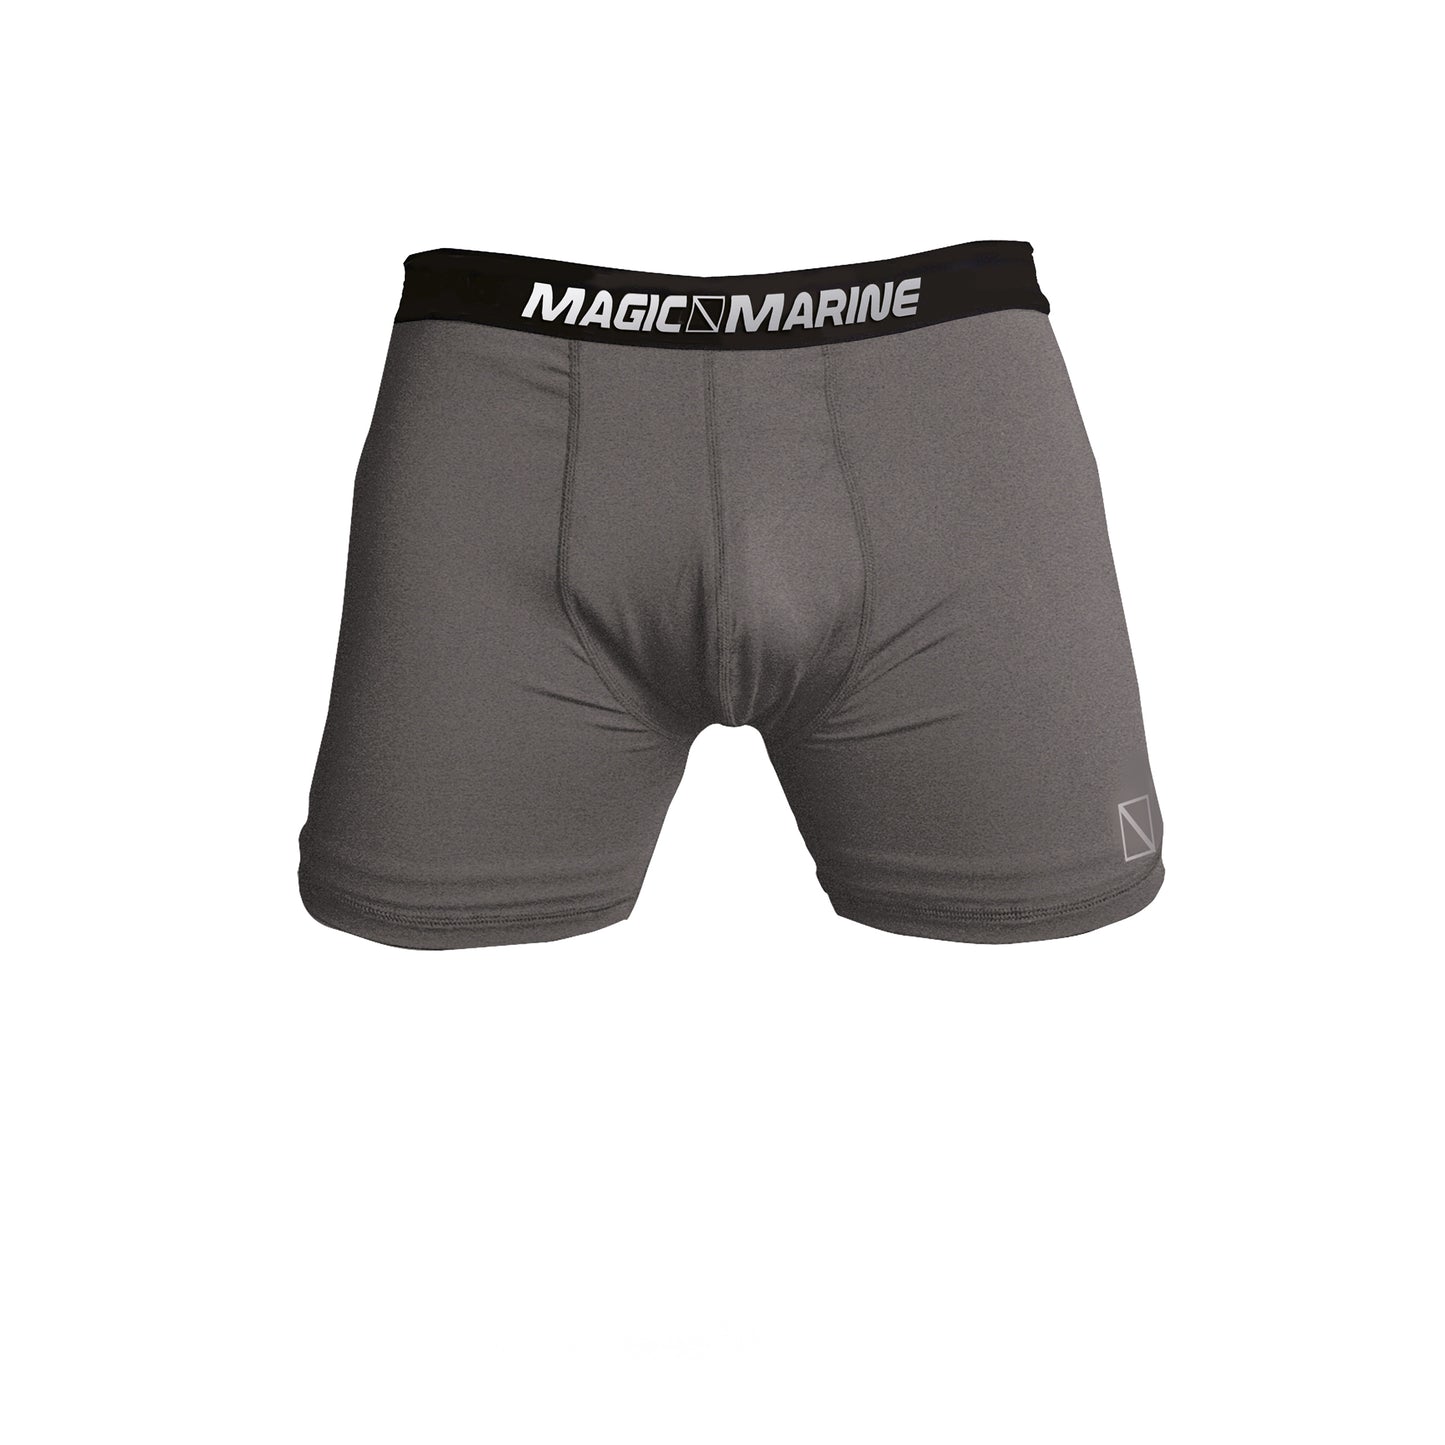 Magic Marine Quickdry Boxers - Dinghy Shack